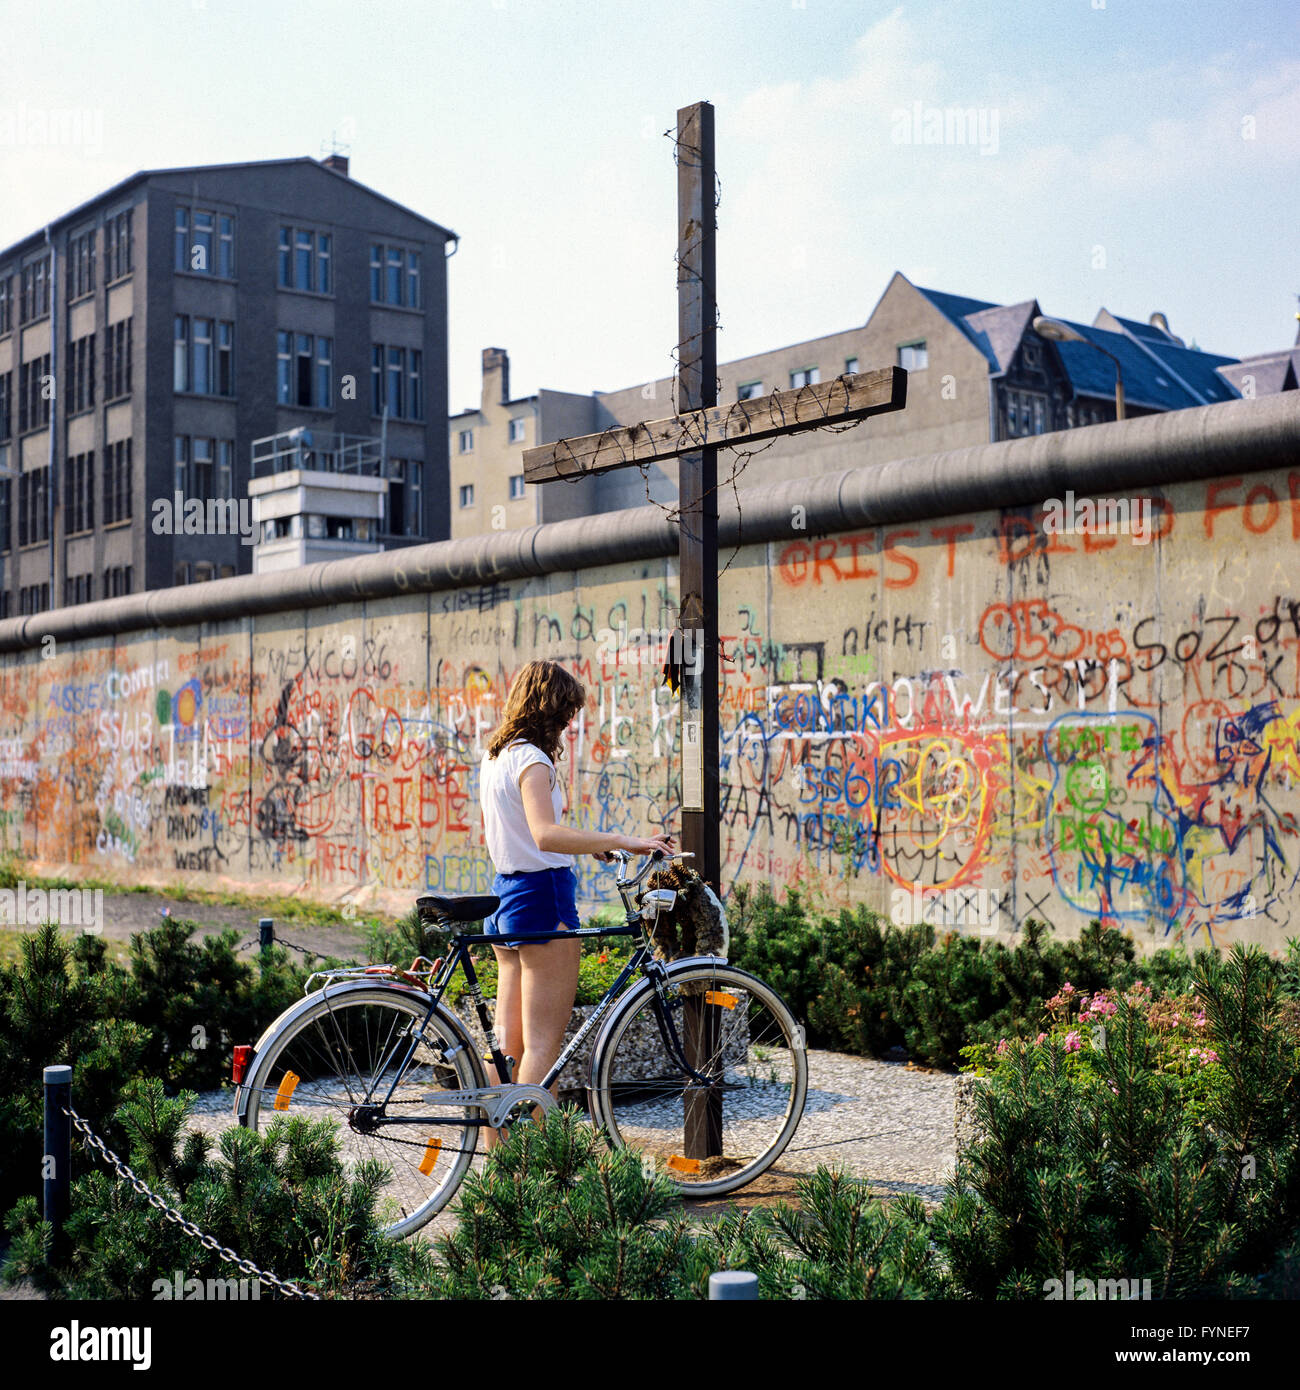 August 1986, young woman with bike, Peter Fechter memorial, graffitis on Berlin Wall, Zimmerstrasse street, Kreuzberg, West Berlin, Germany, Europe, Stock Photo